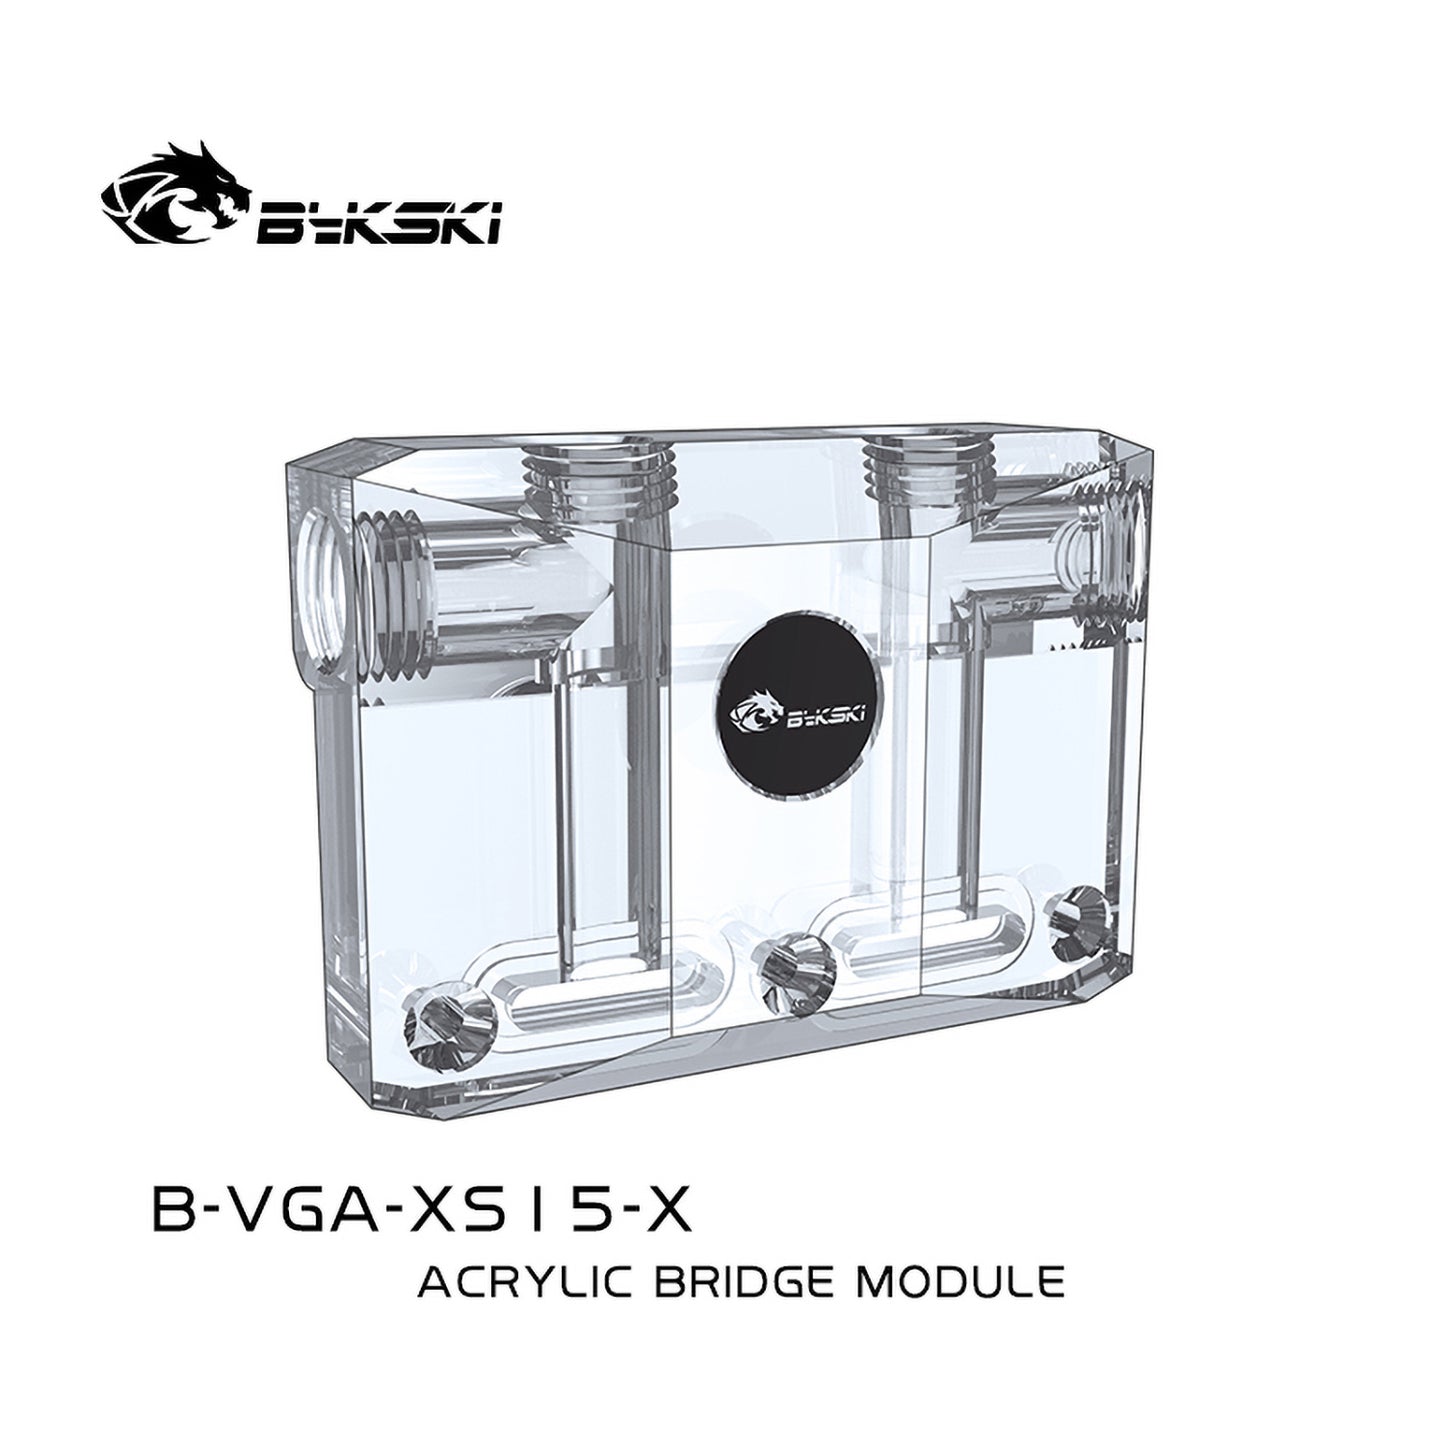 Bykski L-shaped Bridge Module For Bykski GPU block, Change GPU Block Water Inlet/Outlet Ports Direction, Transparent Acrylic Multi-directional Conversion, Water Cooling Block Bridge, B-VGA-XS15-X